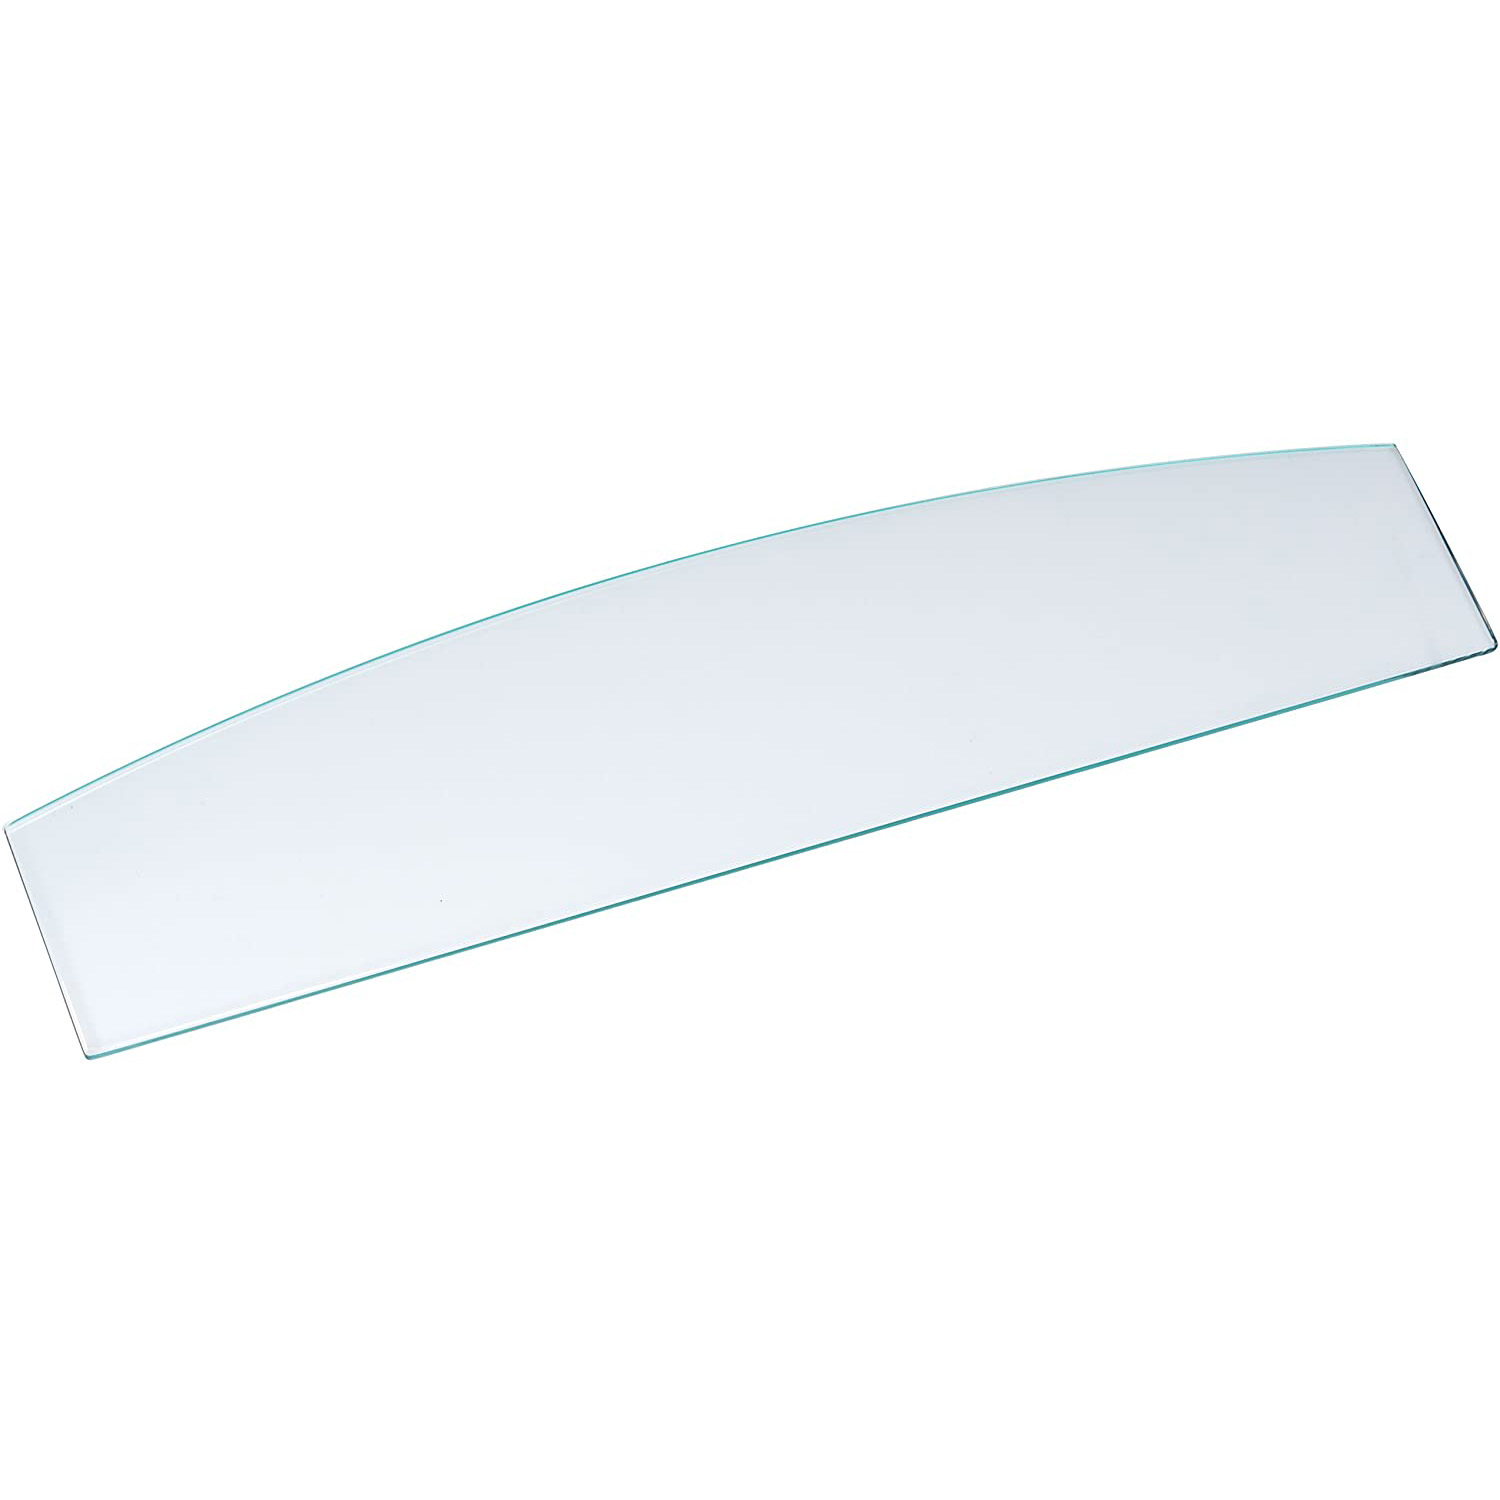 Replacement 17-3/4x4" Arcana Vanity Glass Shelf